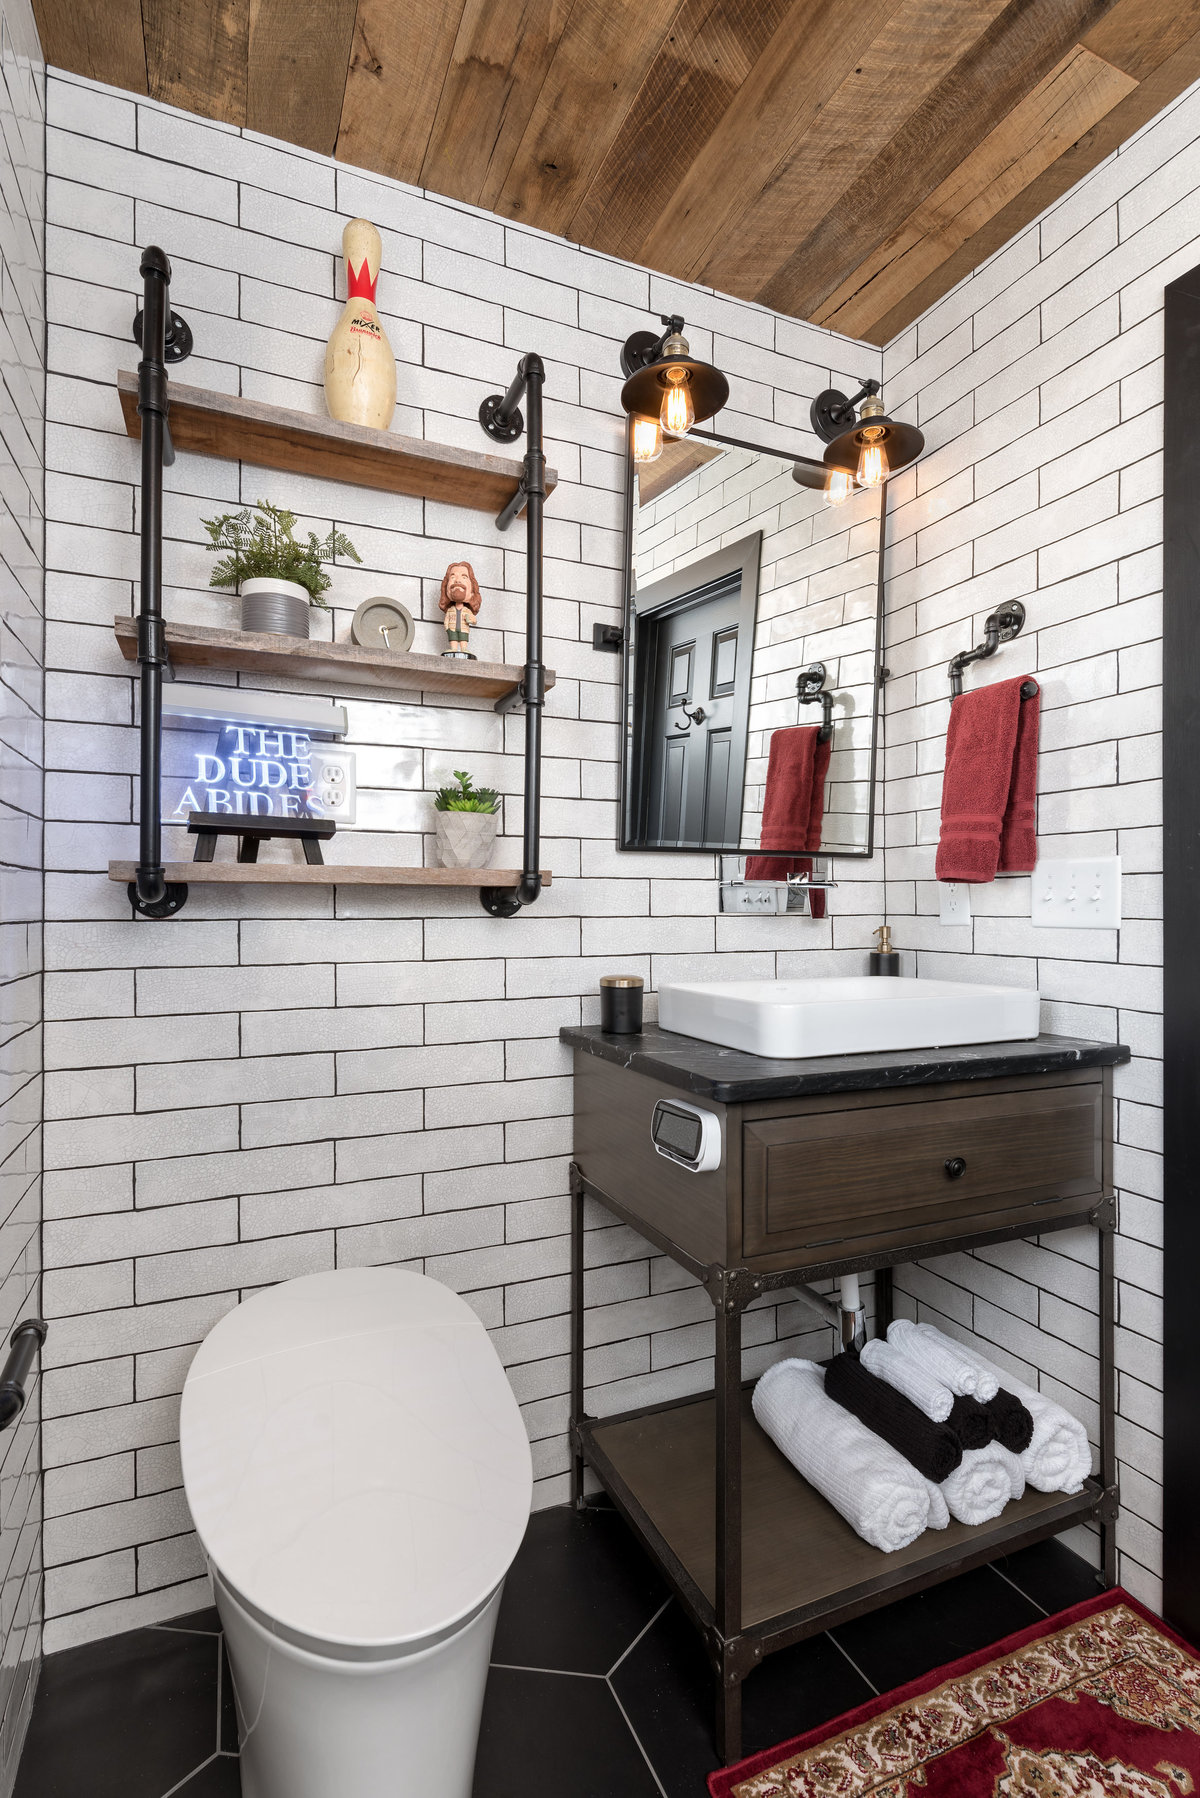 Interior Design and Remodel of Guest Bathroom located in Davidson North Carolina